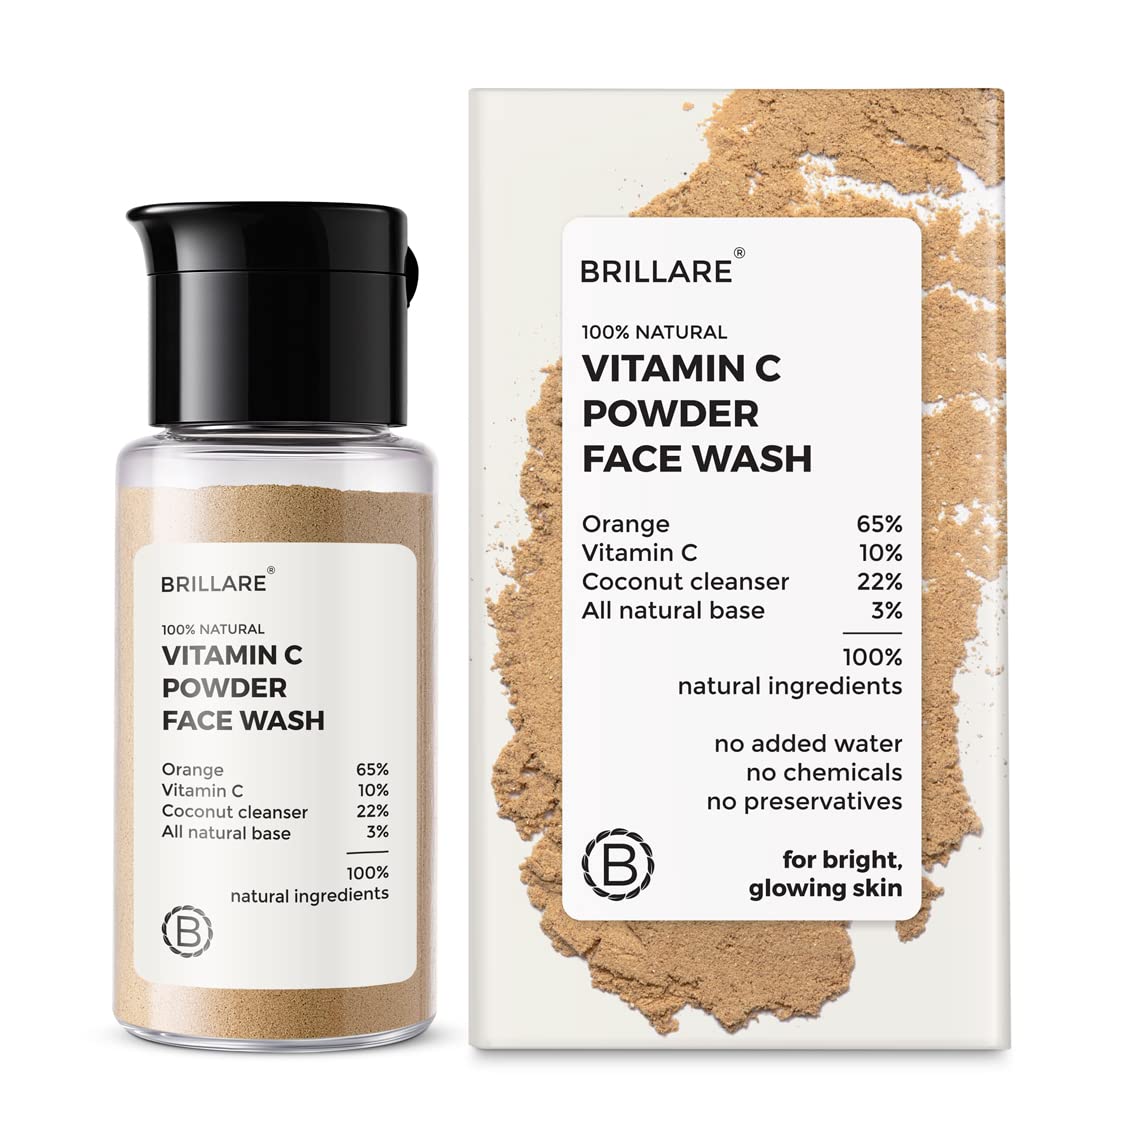 "Brillare 100% Natural Real Vitamin C Powder Face Wash for Skin Brightening, Helps Reduce Pigmentation & Dark Spots, Contains Orange Peel & Stable Vitamin C, 15g "